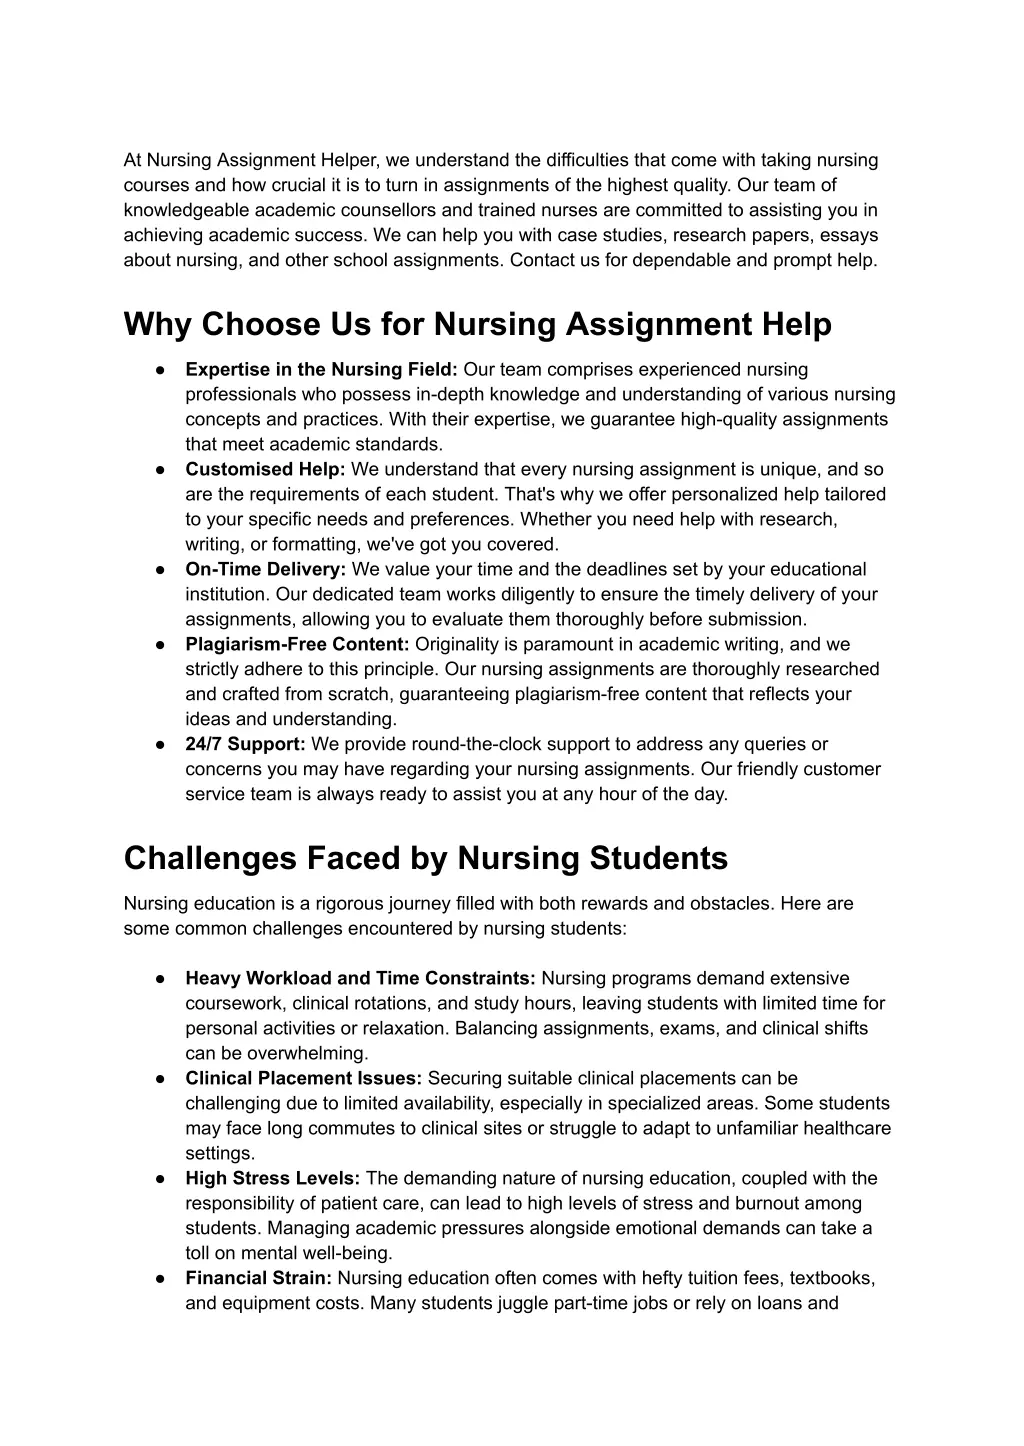 at nursing assignment helper we understand